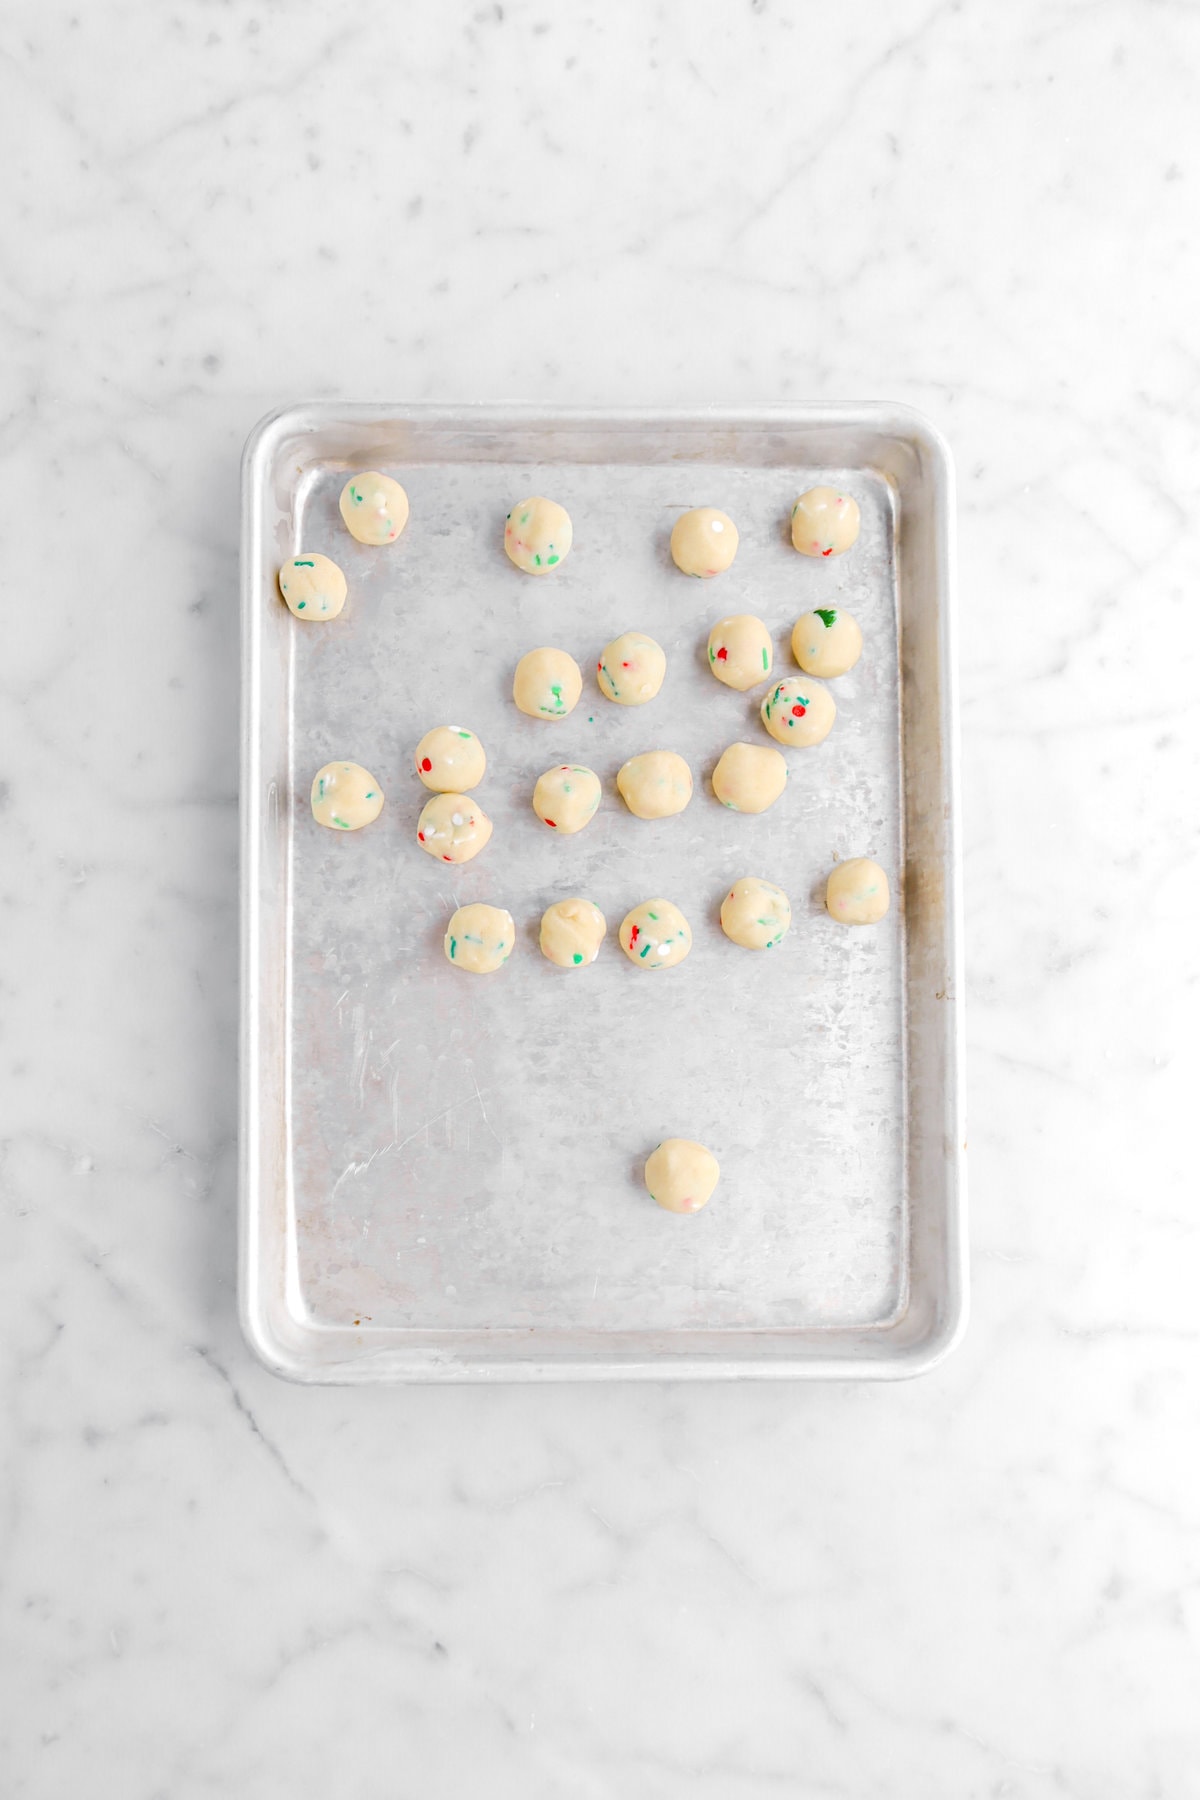 cookie dough balls on small sheet pan.